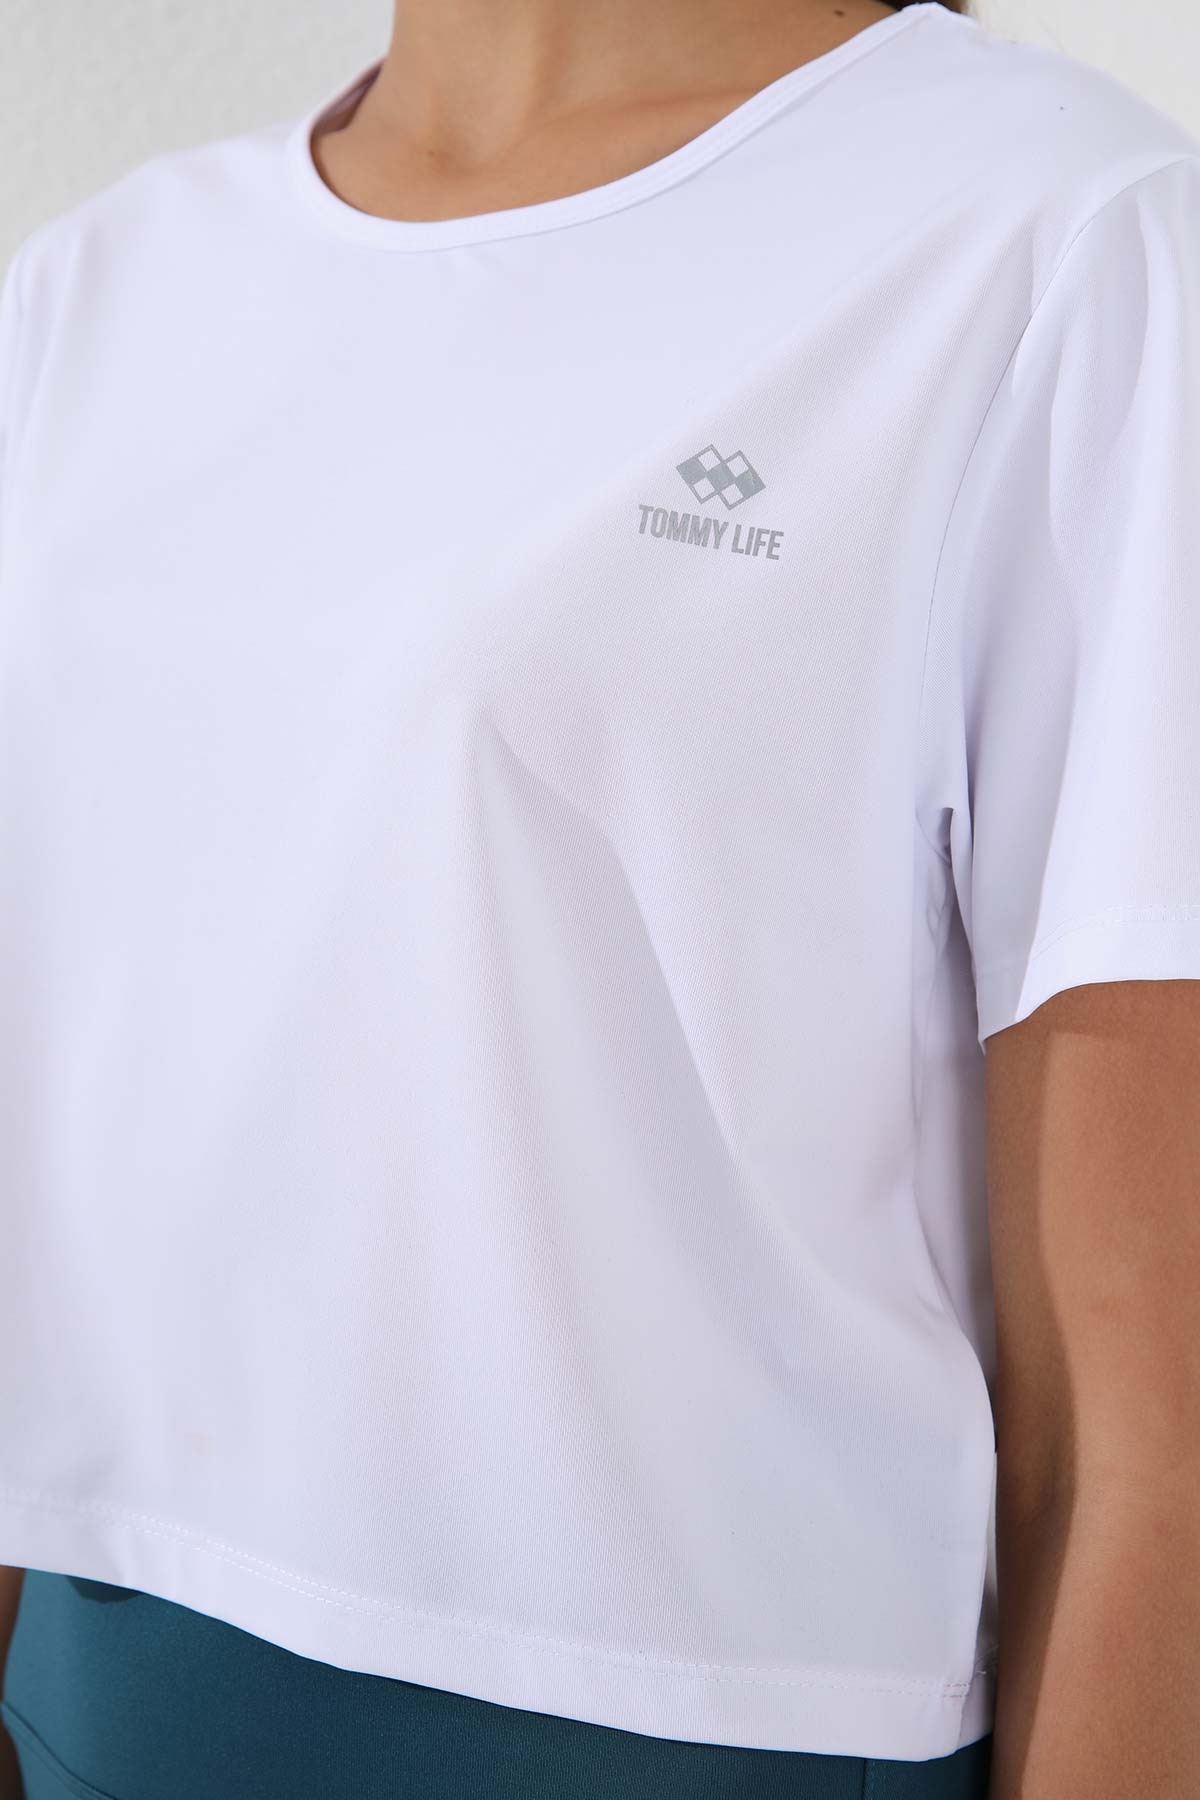 Beyaz Basic Kısa Kol Standart Kalıp O Yaka Kadın Crop Top T-Shirt - 97143